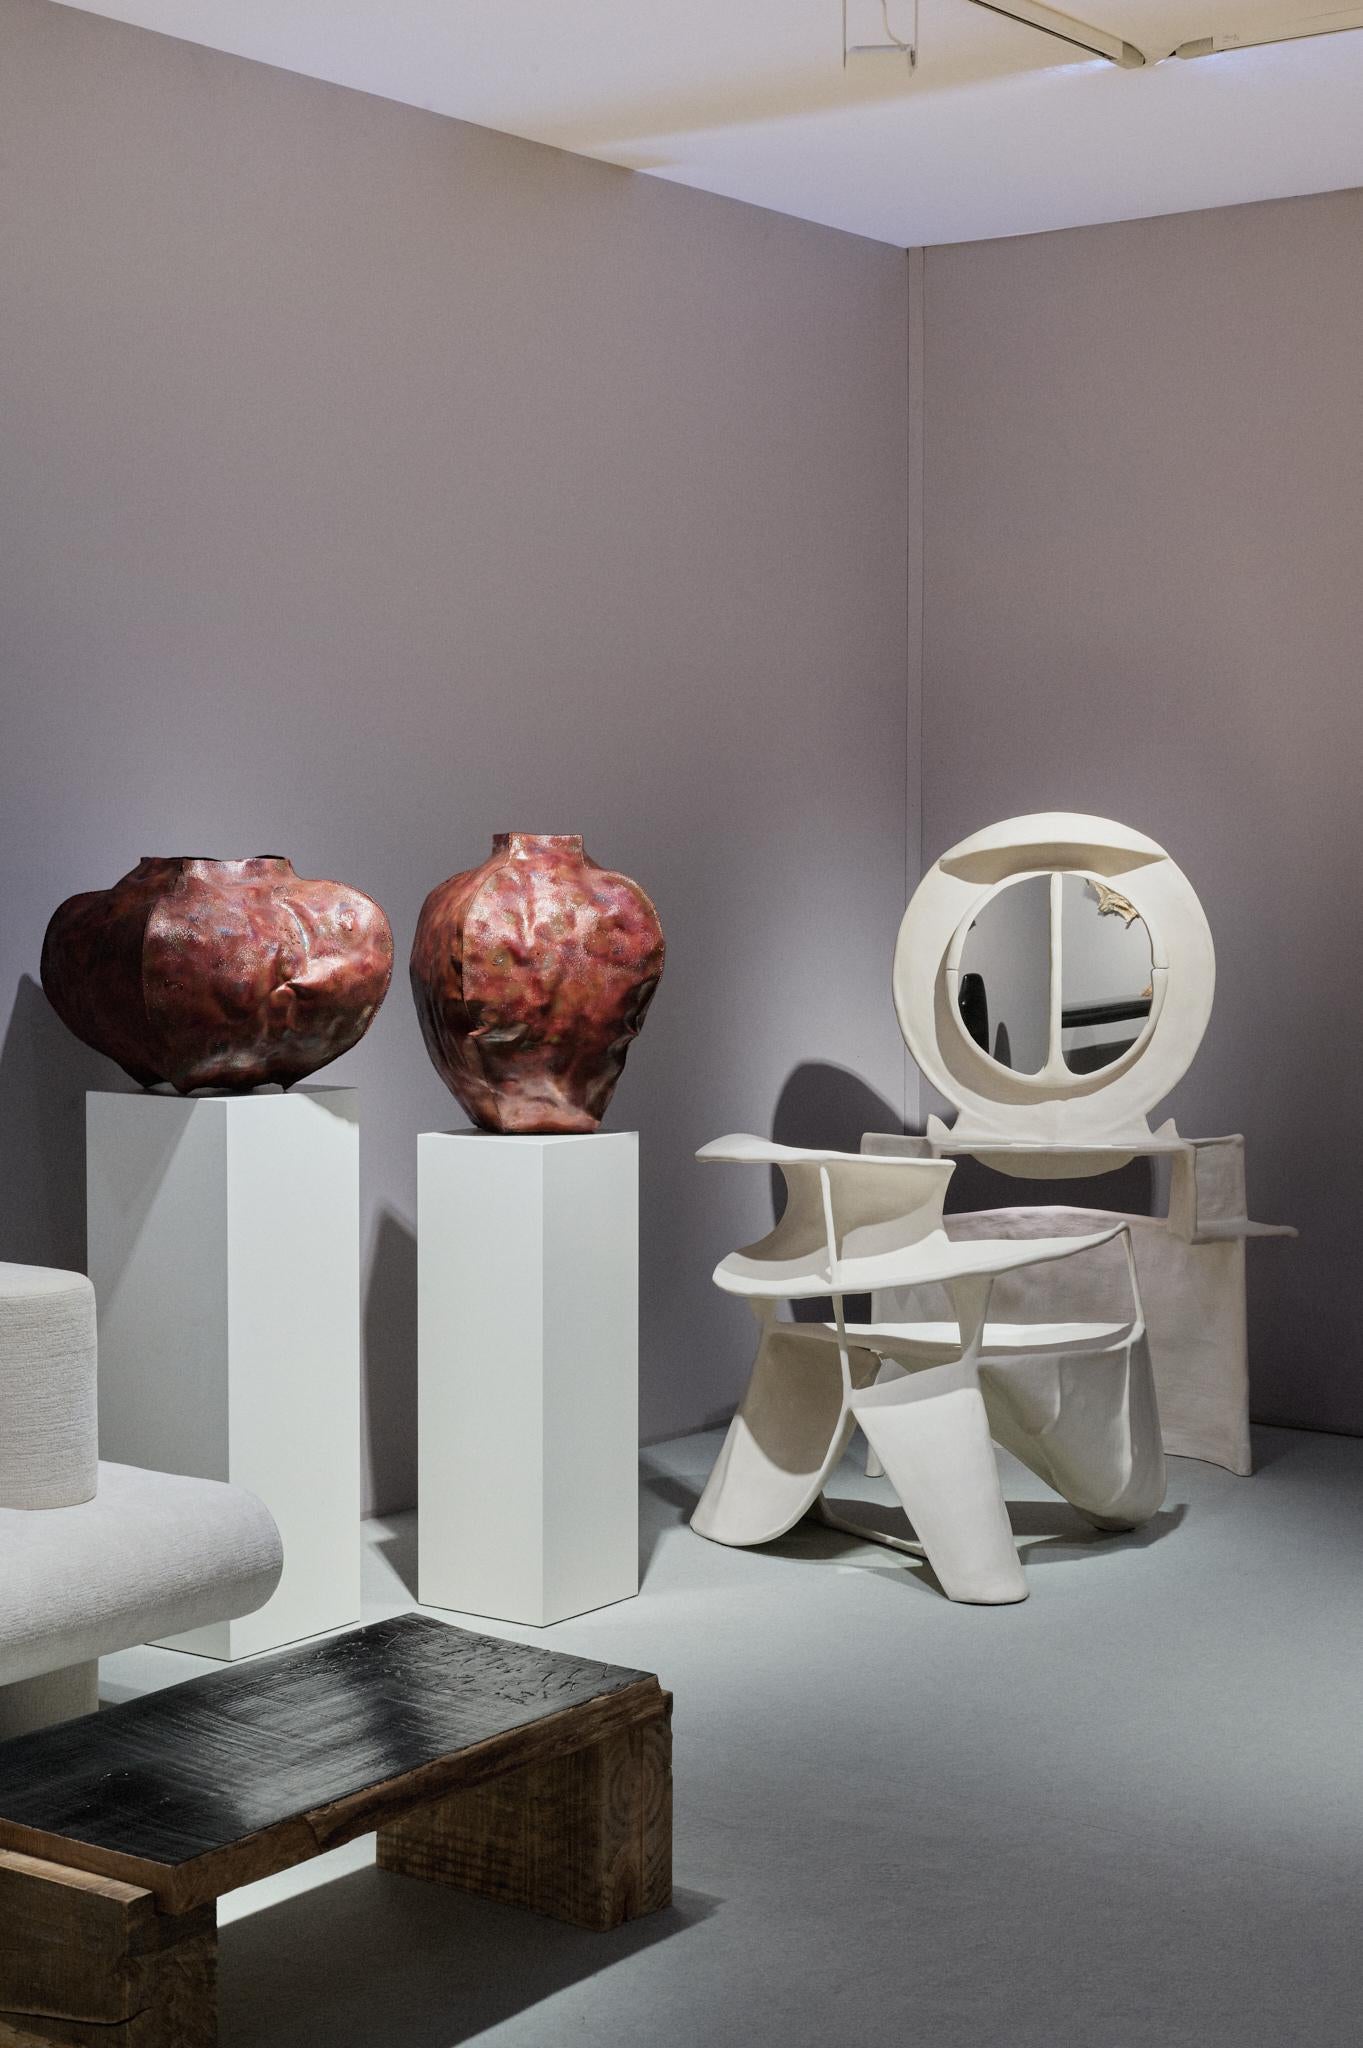 Contemporary Design White Textured Curved Sculptures Chair by Jordan van der Ven For Sale 7